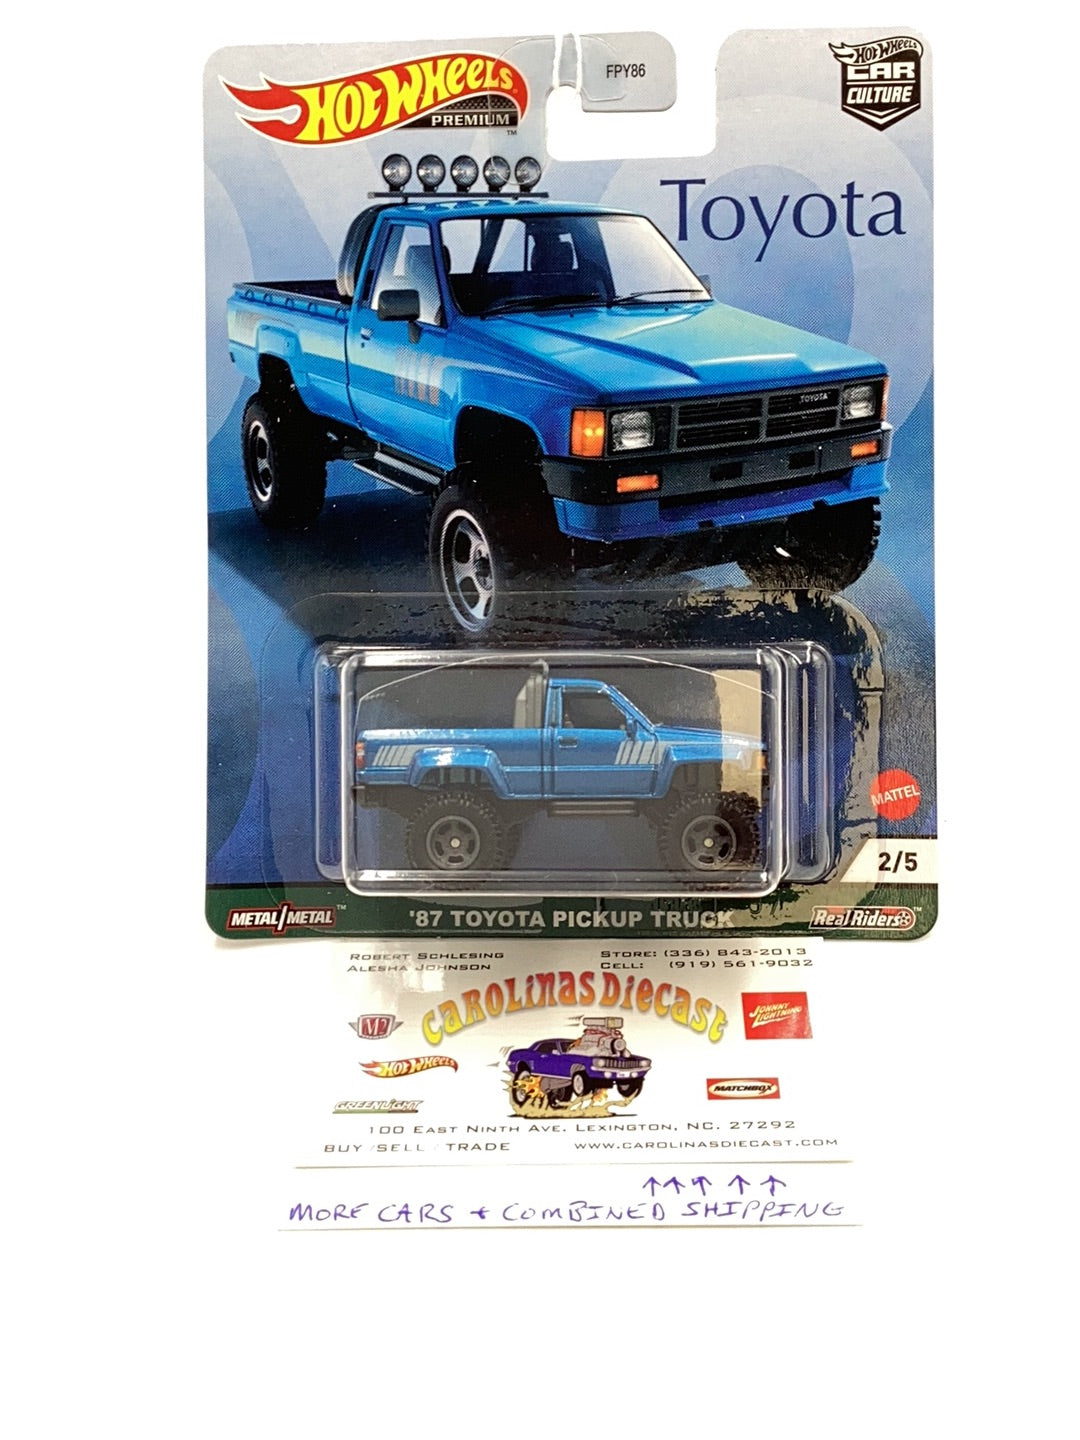 2021 Hot wheels car culture Toyota 87 Toyota Pickup Truck 2/5